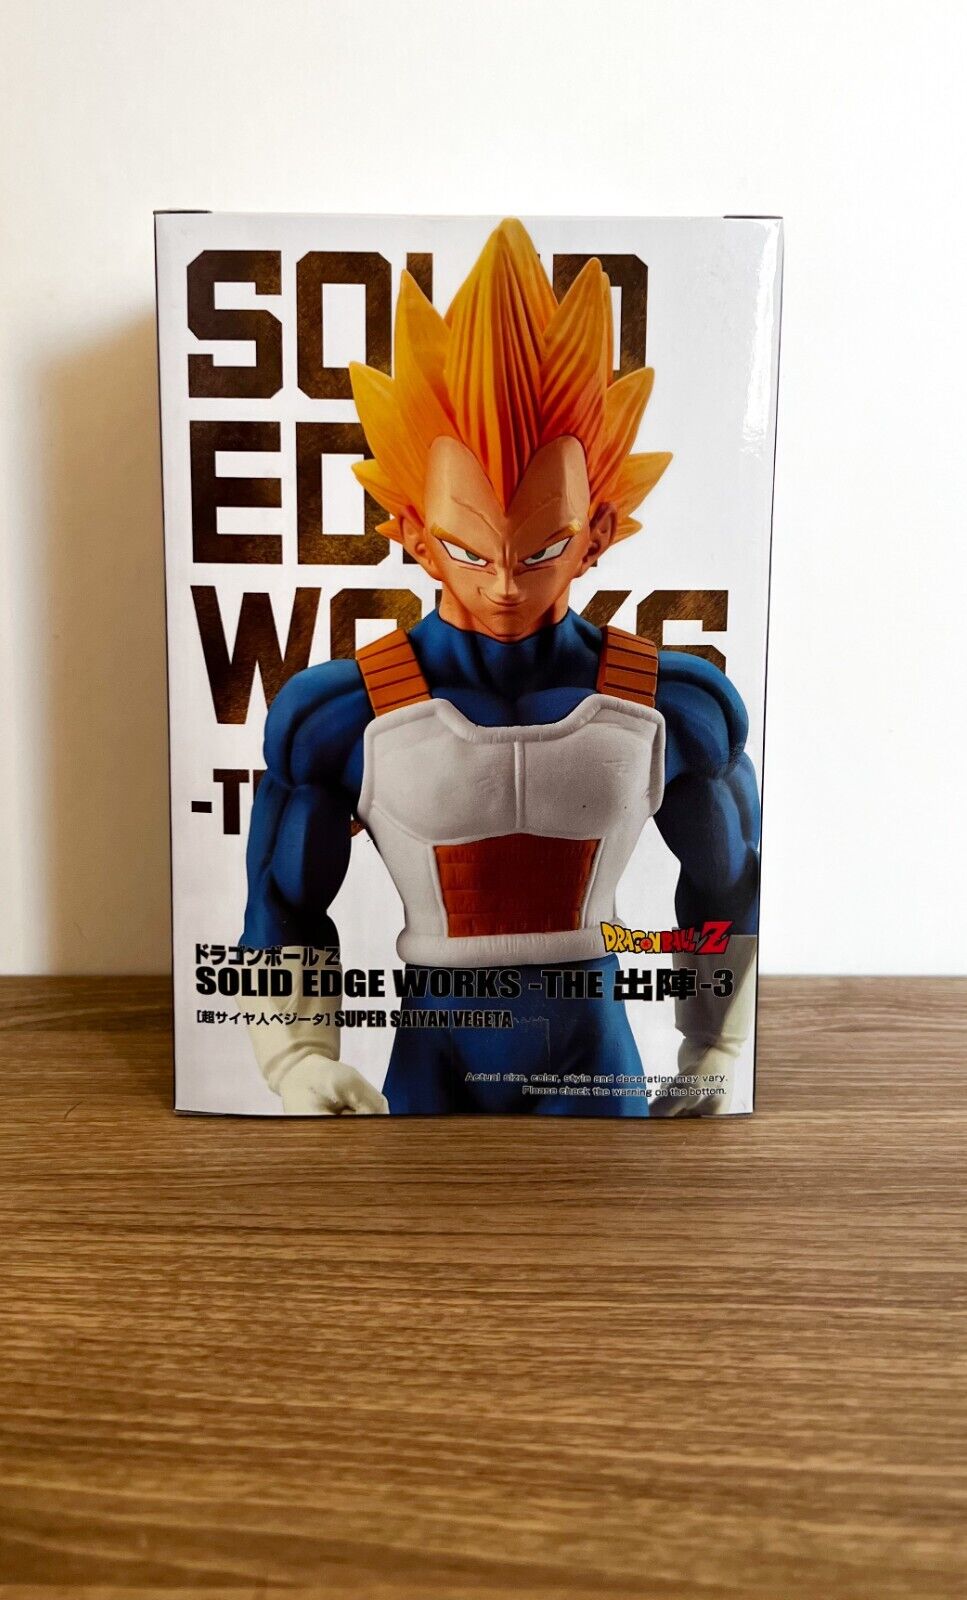 Banpresto Dragon Ball Z Solid Edge Works Super Saiyan Vegeta (Goku Trunks Gohan)